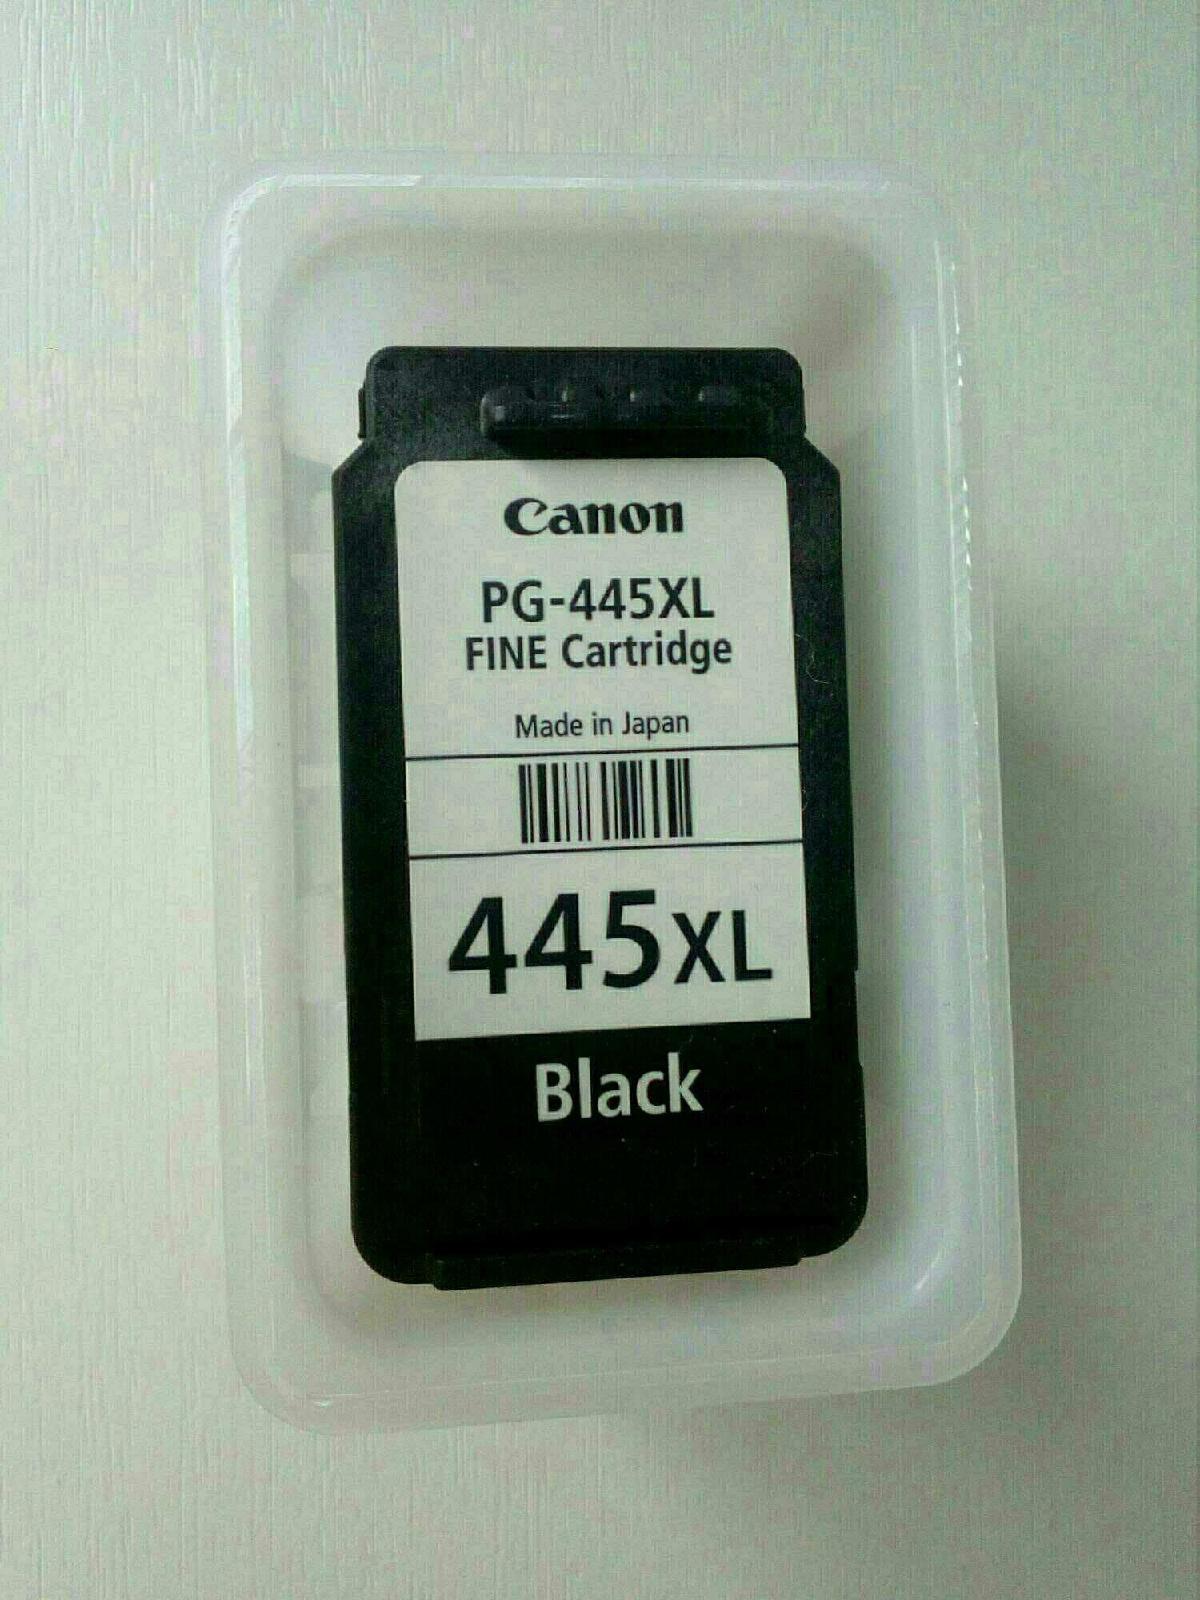 PG-445xl. Картридж Canon PG-445xl фото. Pg445 XL заправить самому. Как выглядит чип на картриджах 445 и 446. Купить картридж pg 445xl